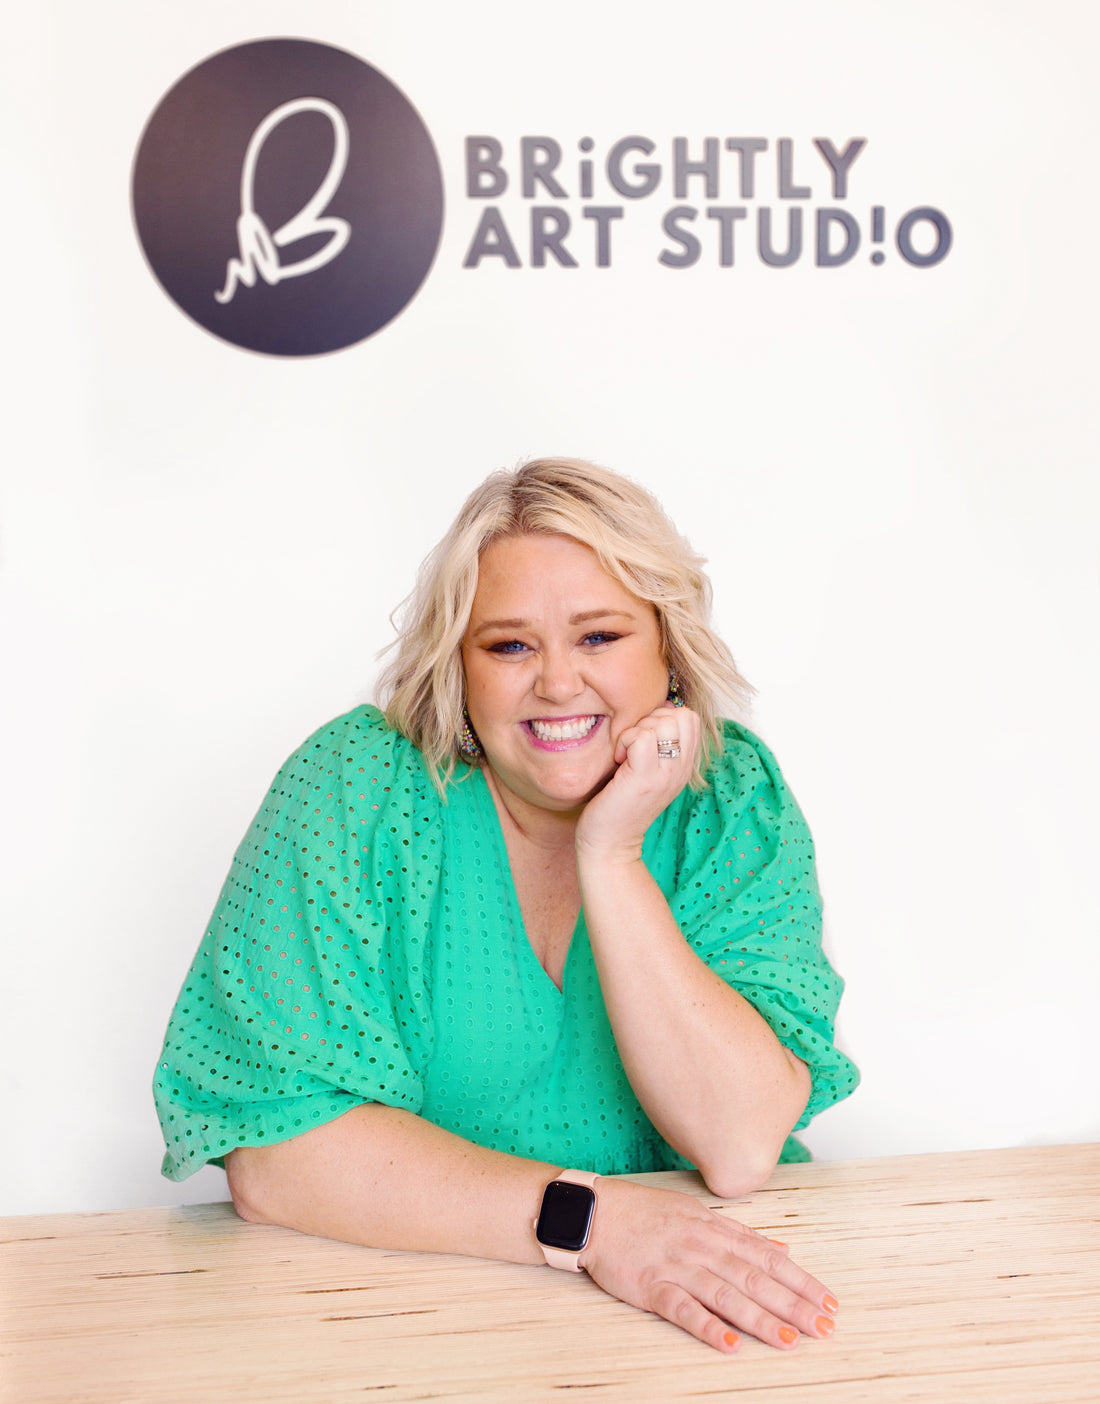 Laura Gambrel owner of Brightly Art Studio